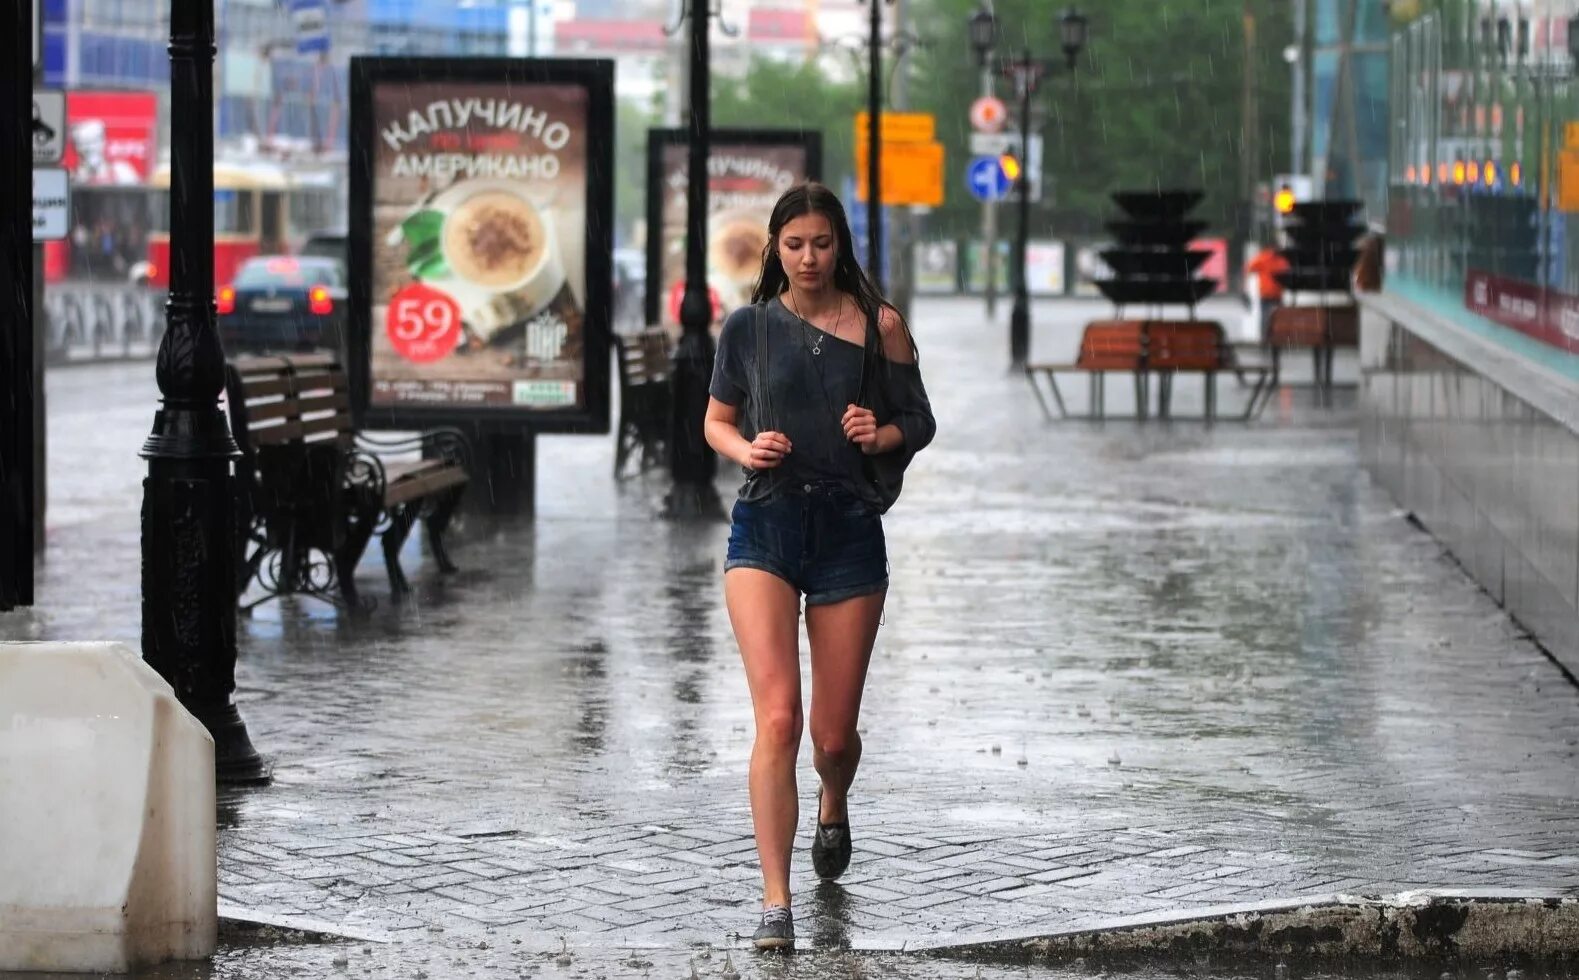 Девушки на улицах Екатеринбурга. Ливень на улице. Девушки в жару на улицах. Девушка промокла под дождем.